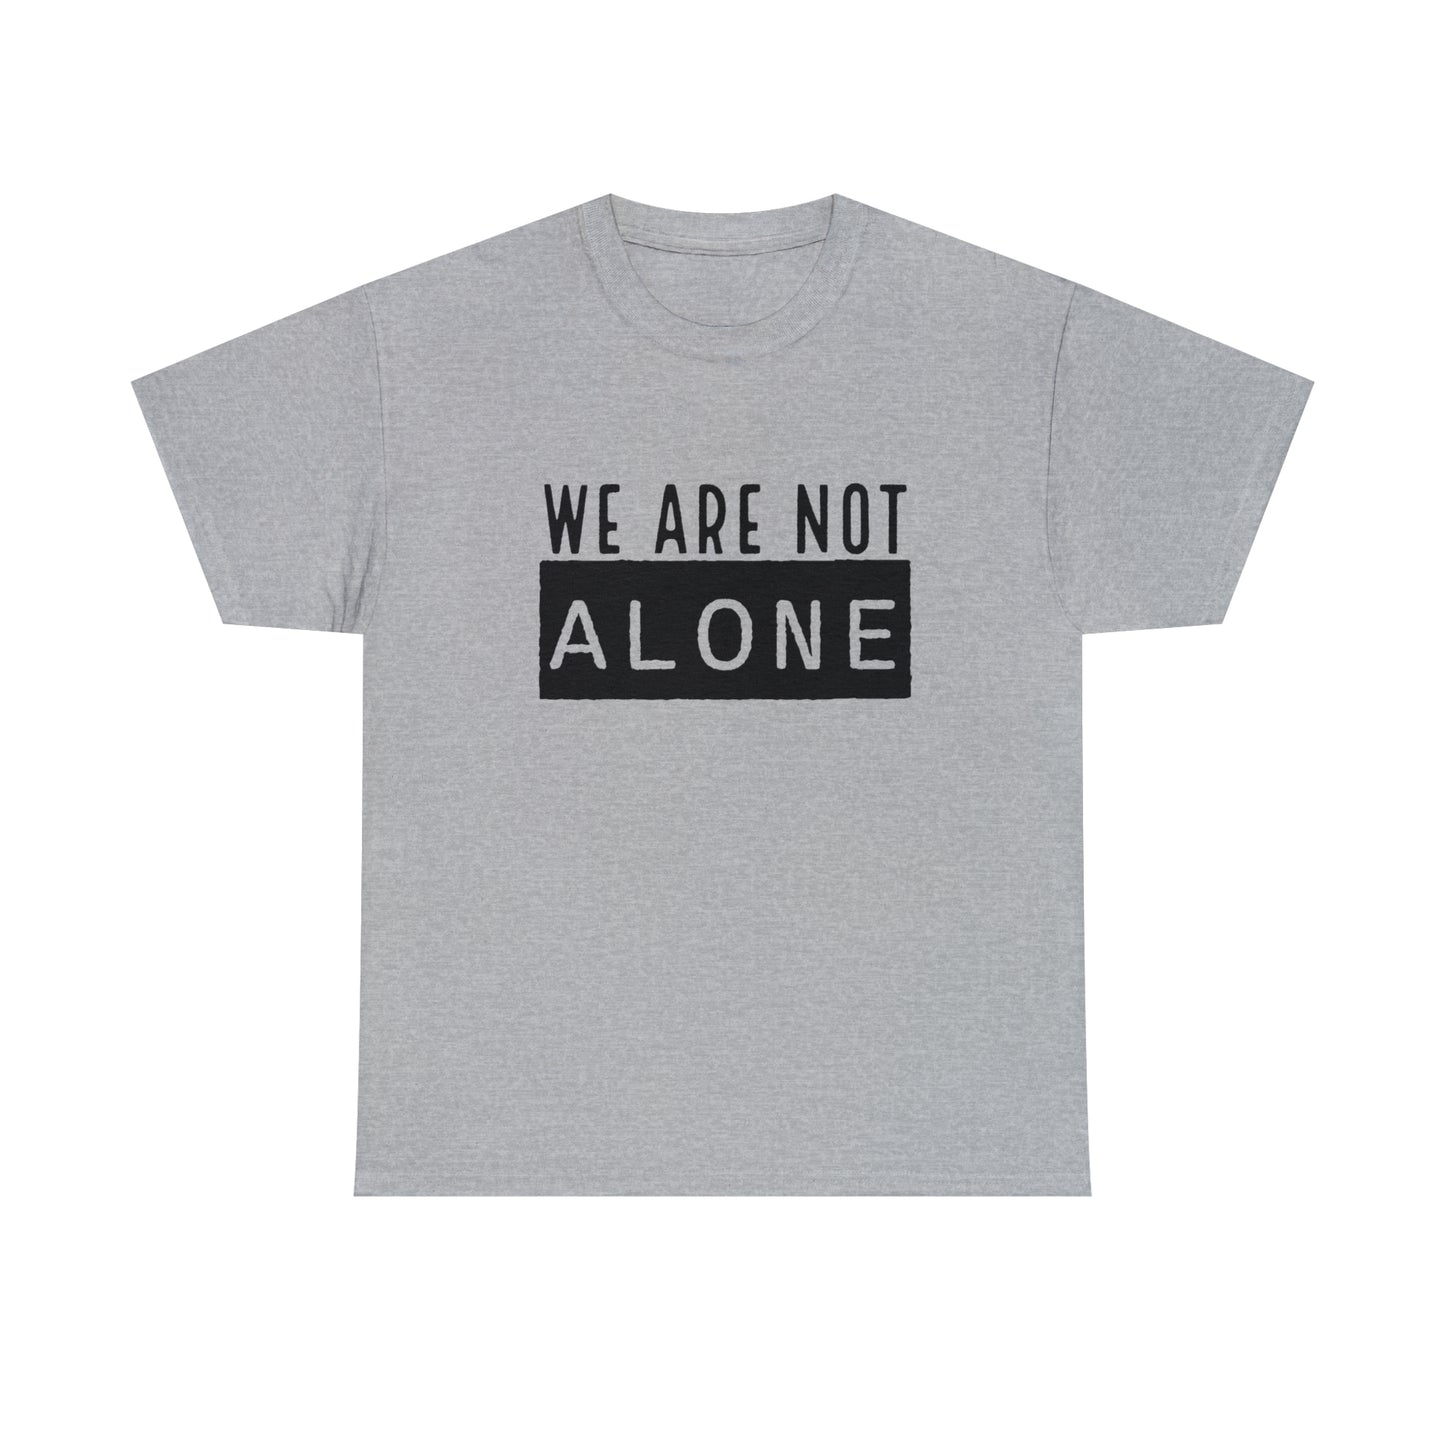 Alien T-Shirt For Not Alone T Shirt For Alien Abduction T Shirt For Conspiracy Shirt For Extraterrestrial TShirt For Outer Space Shirt For Funny Alien Gift